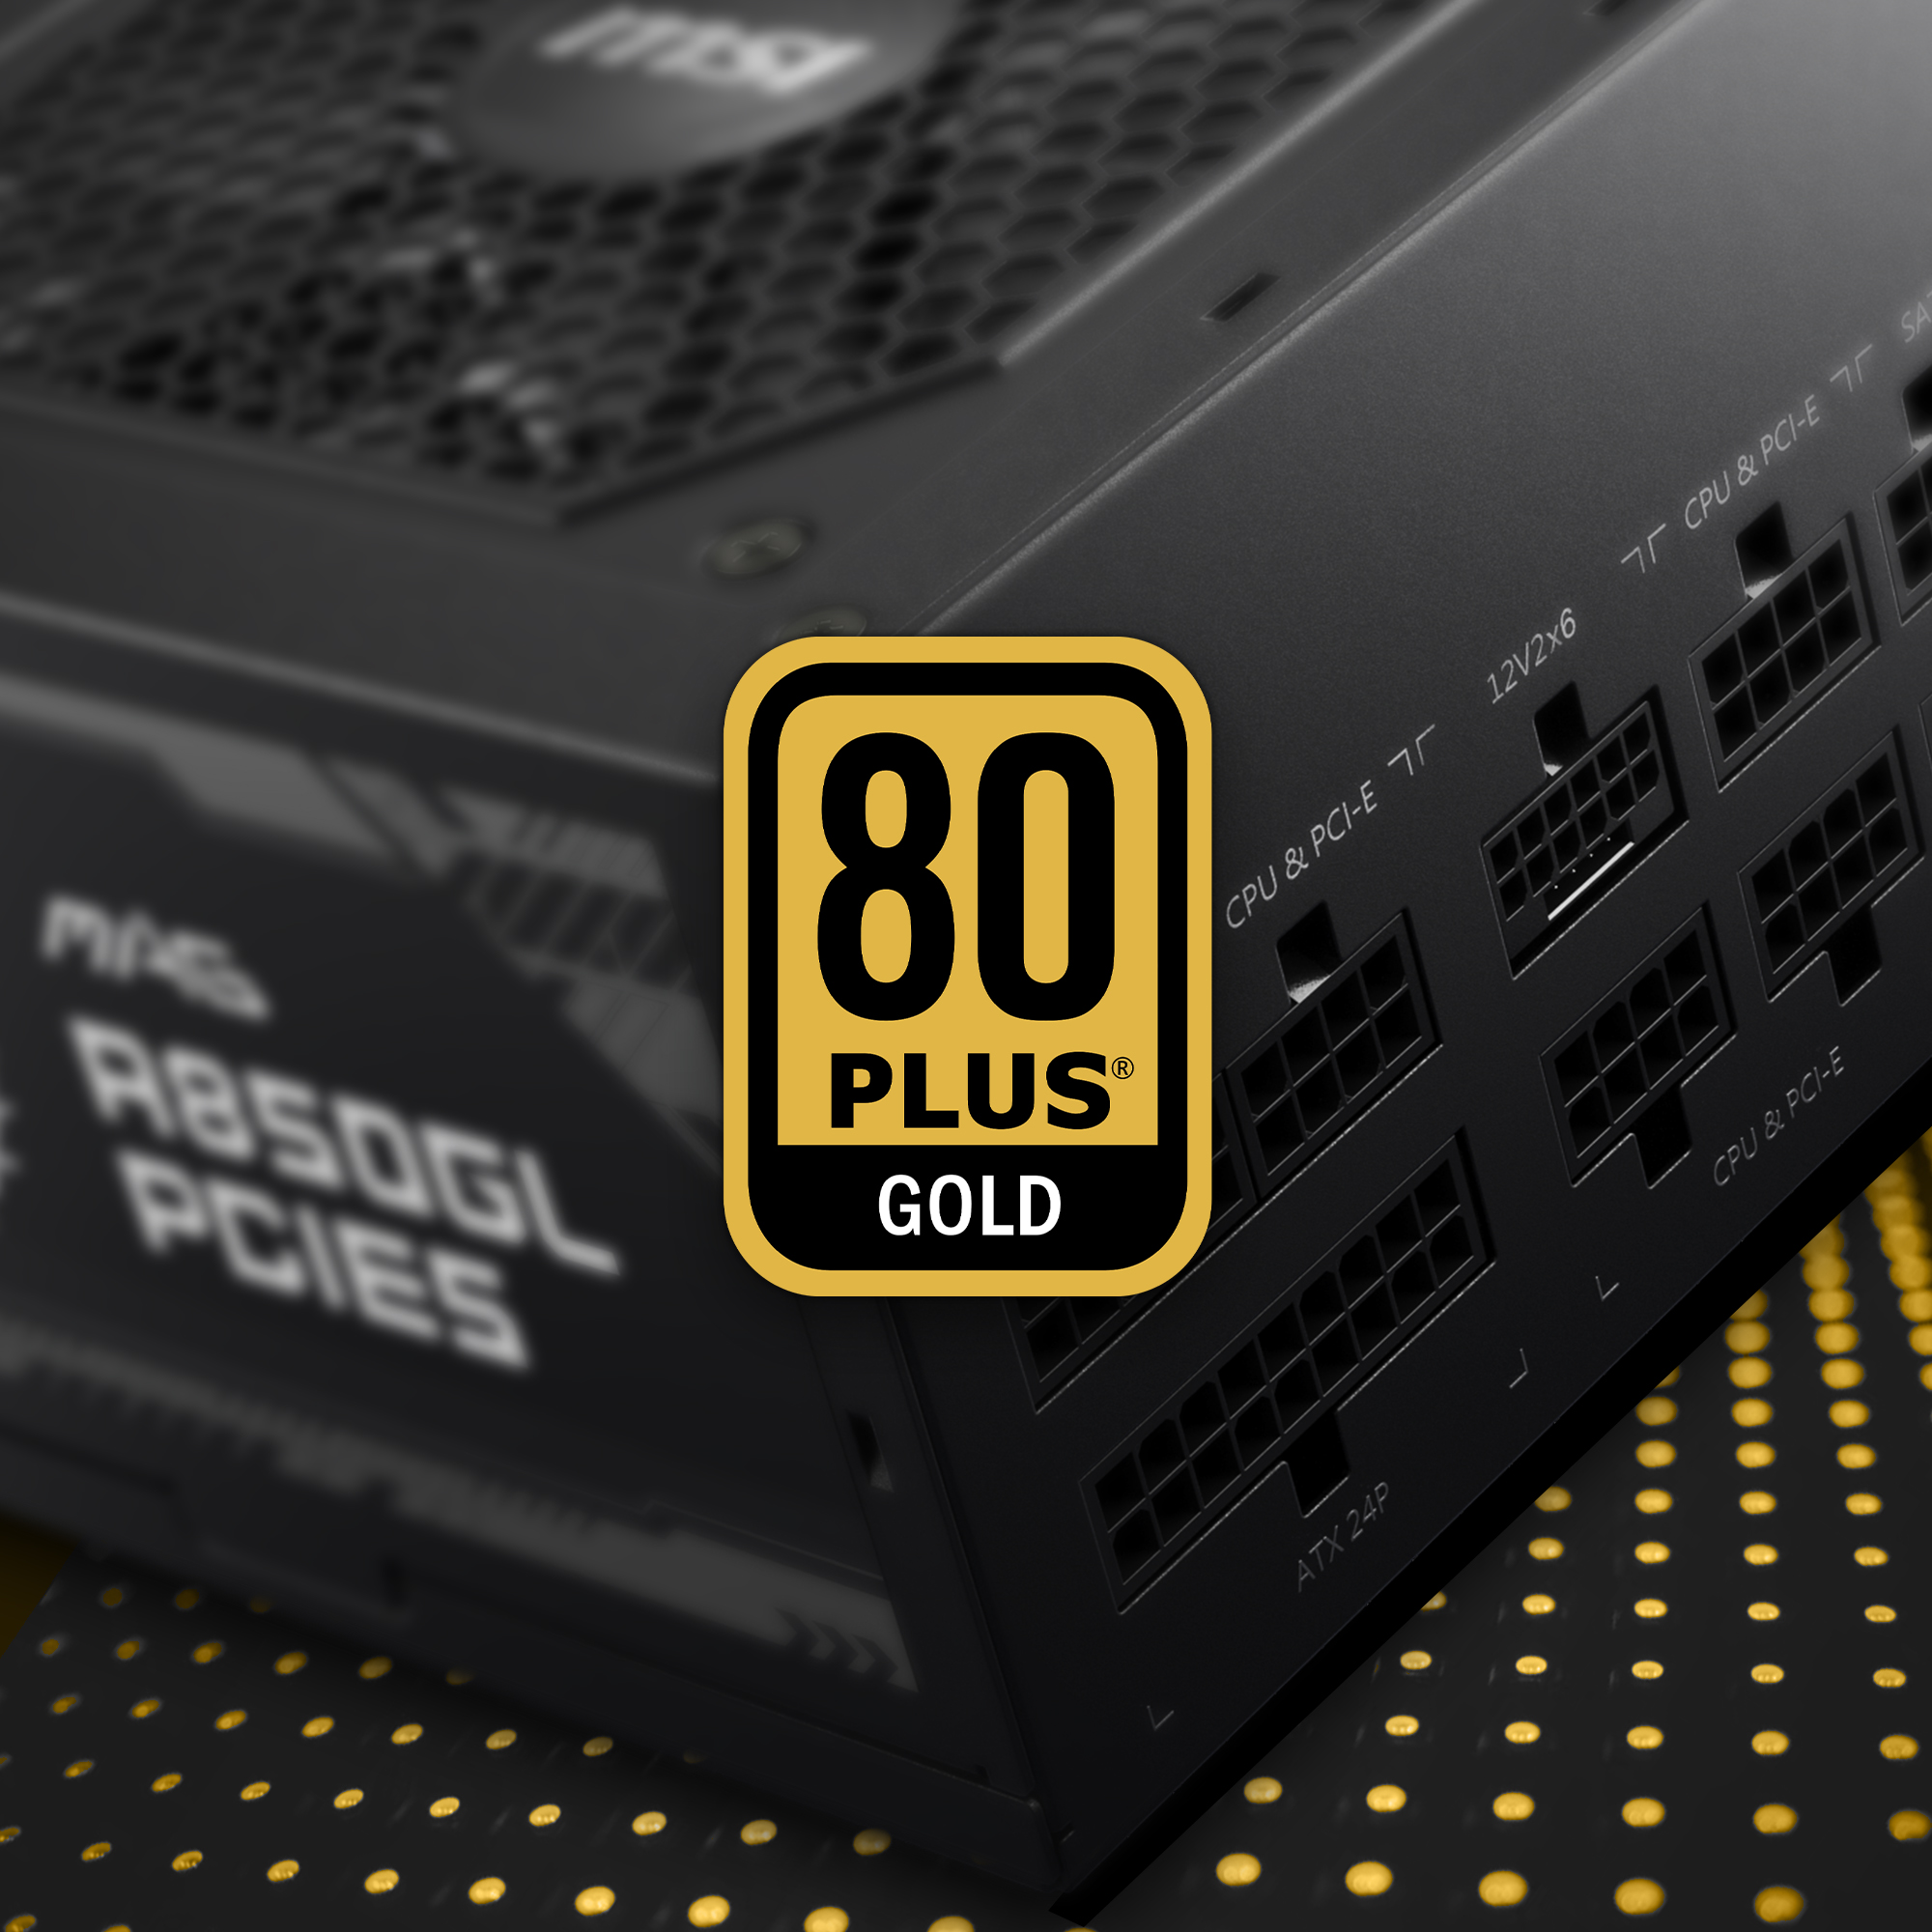 MSI - MAG A850GL PCIE 5.0, 80 GOLD Fully Modular Gaming PSU